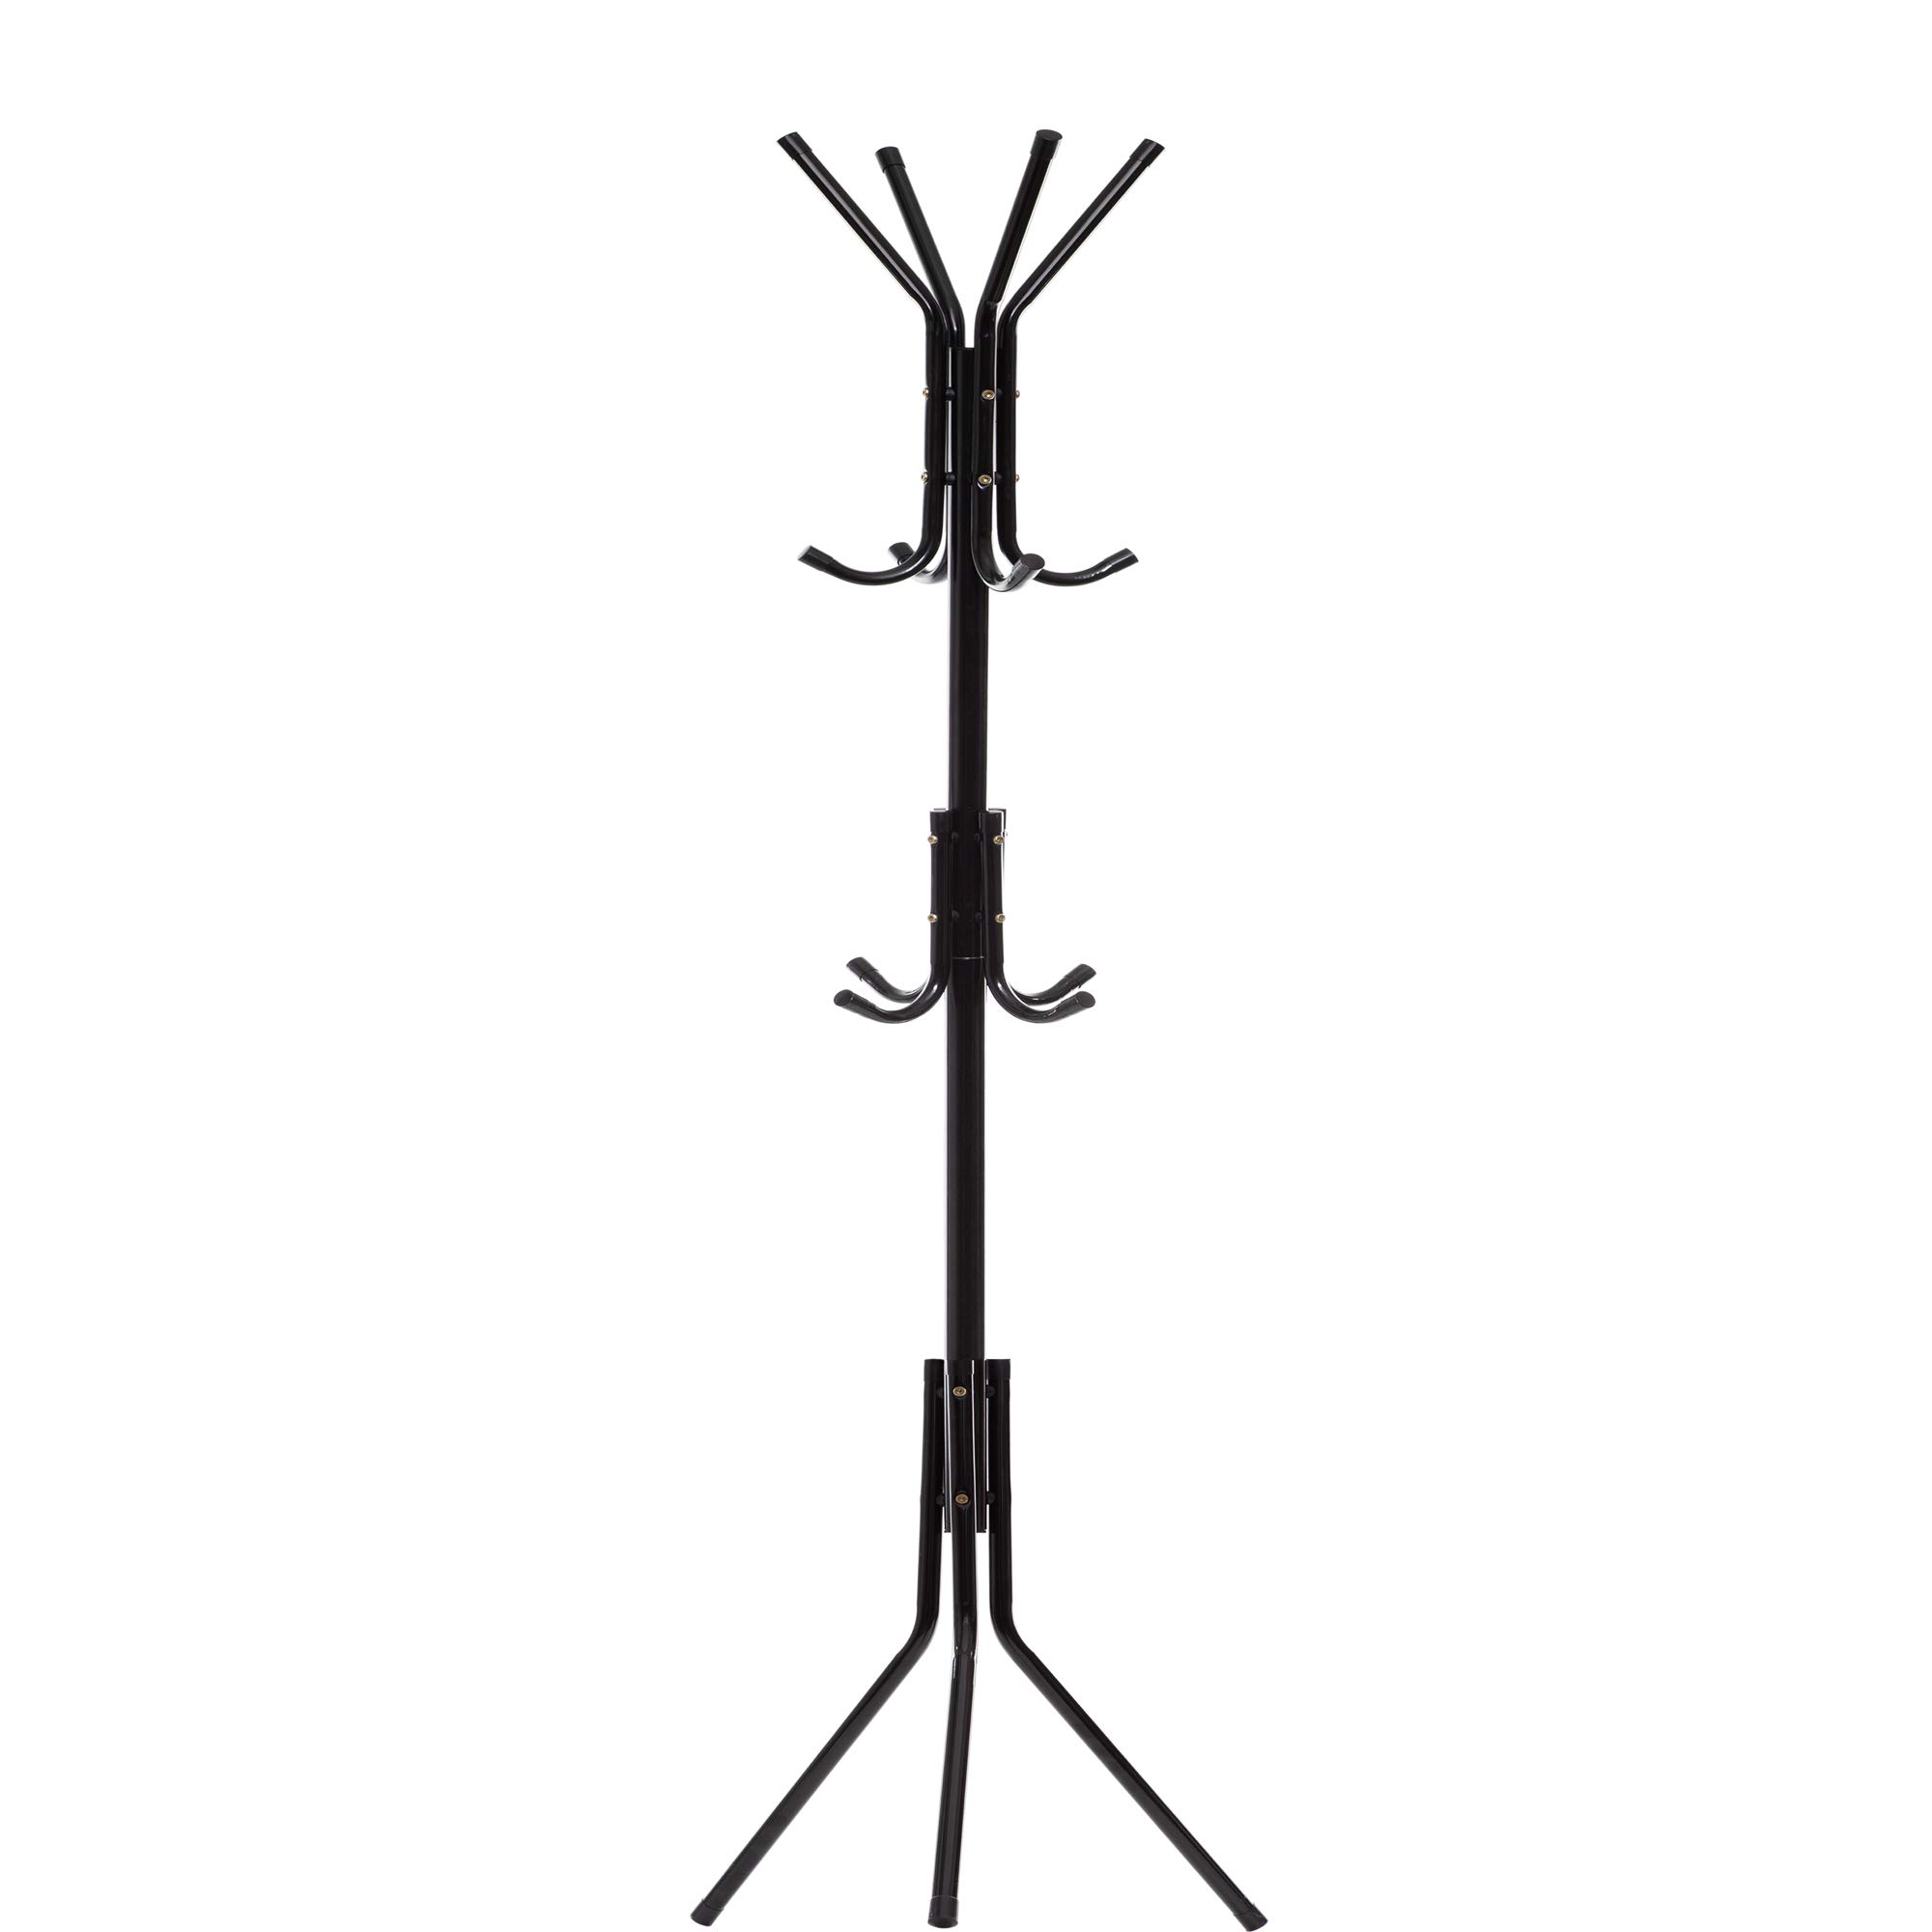 Free-Standing Coat Rack Metal Stand - Hall Tree Entry-Way Furniture Best for Hanging Up Jacket, Purse, Hand-Bag, Cloth, Hat, Winter Scarf Holder - Home or Office Floor Hanger 12-Hooks Organizer, Black